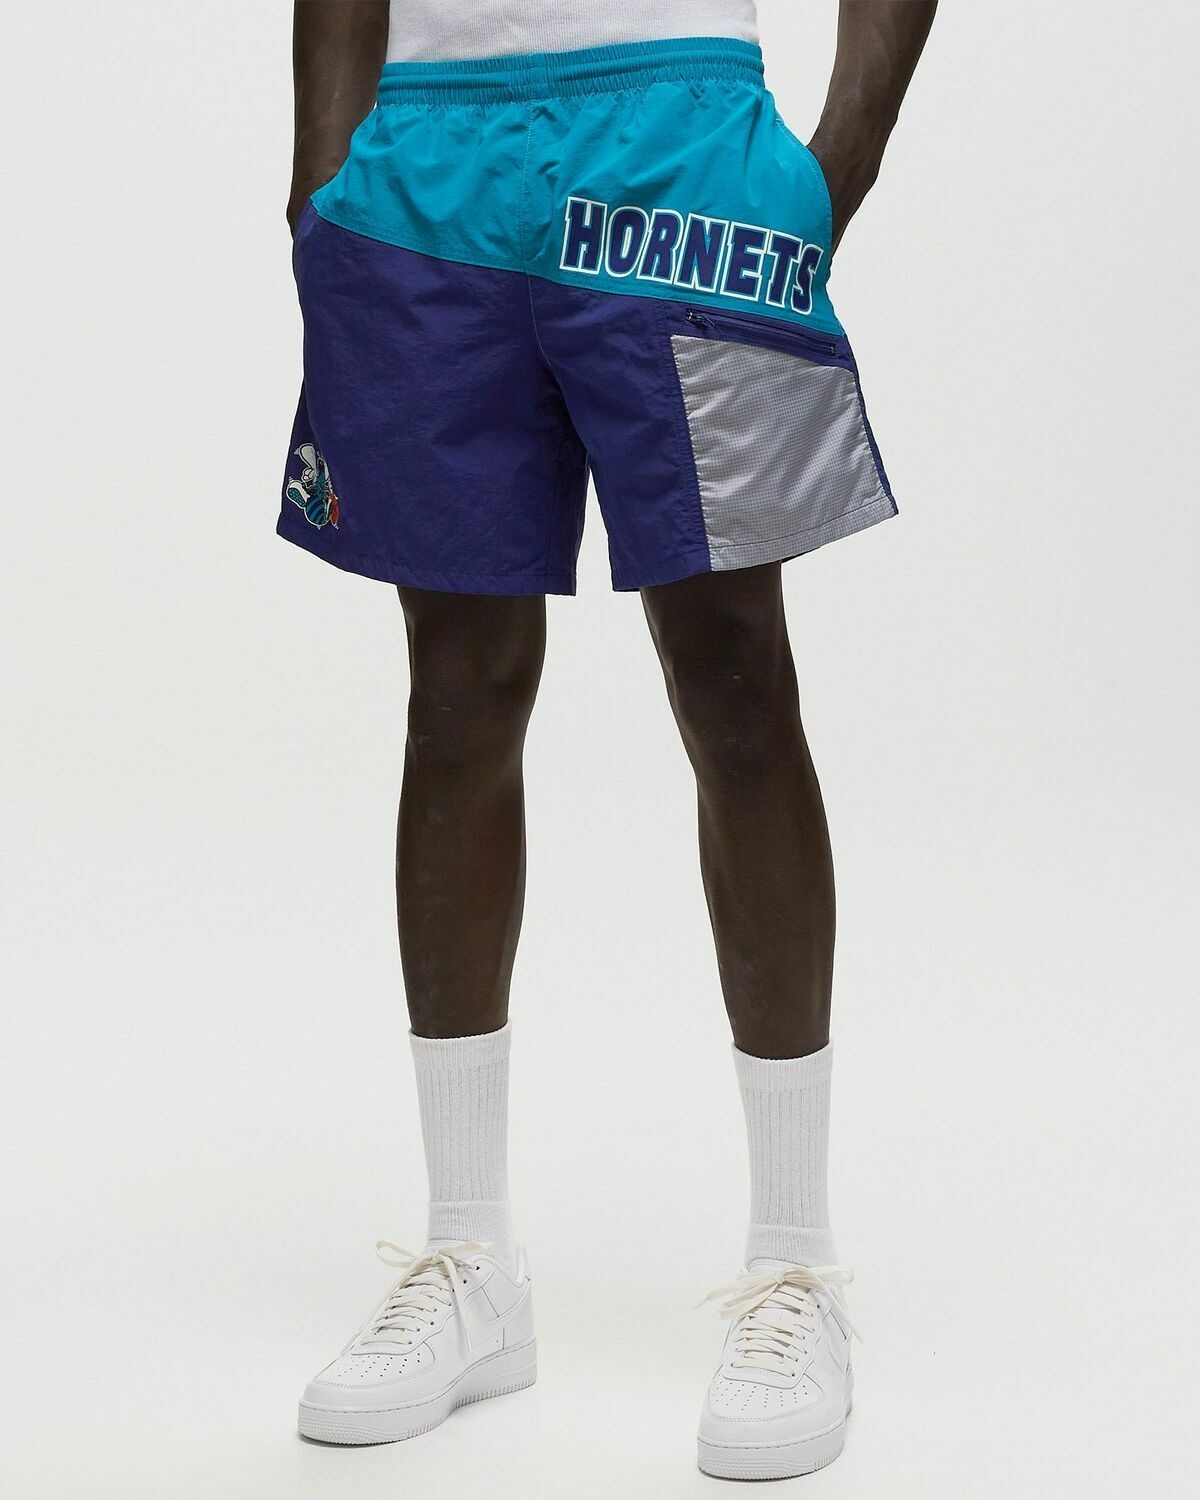 Mitchell & Ness Nba Nylon Utility Short Charlotte Hornets Green/Purple - Mens - Sport & Team Shorts